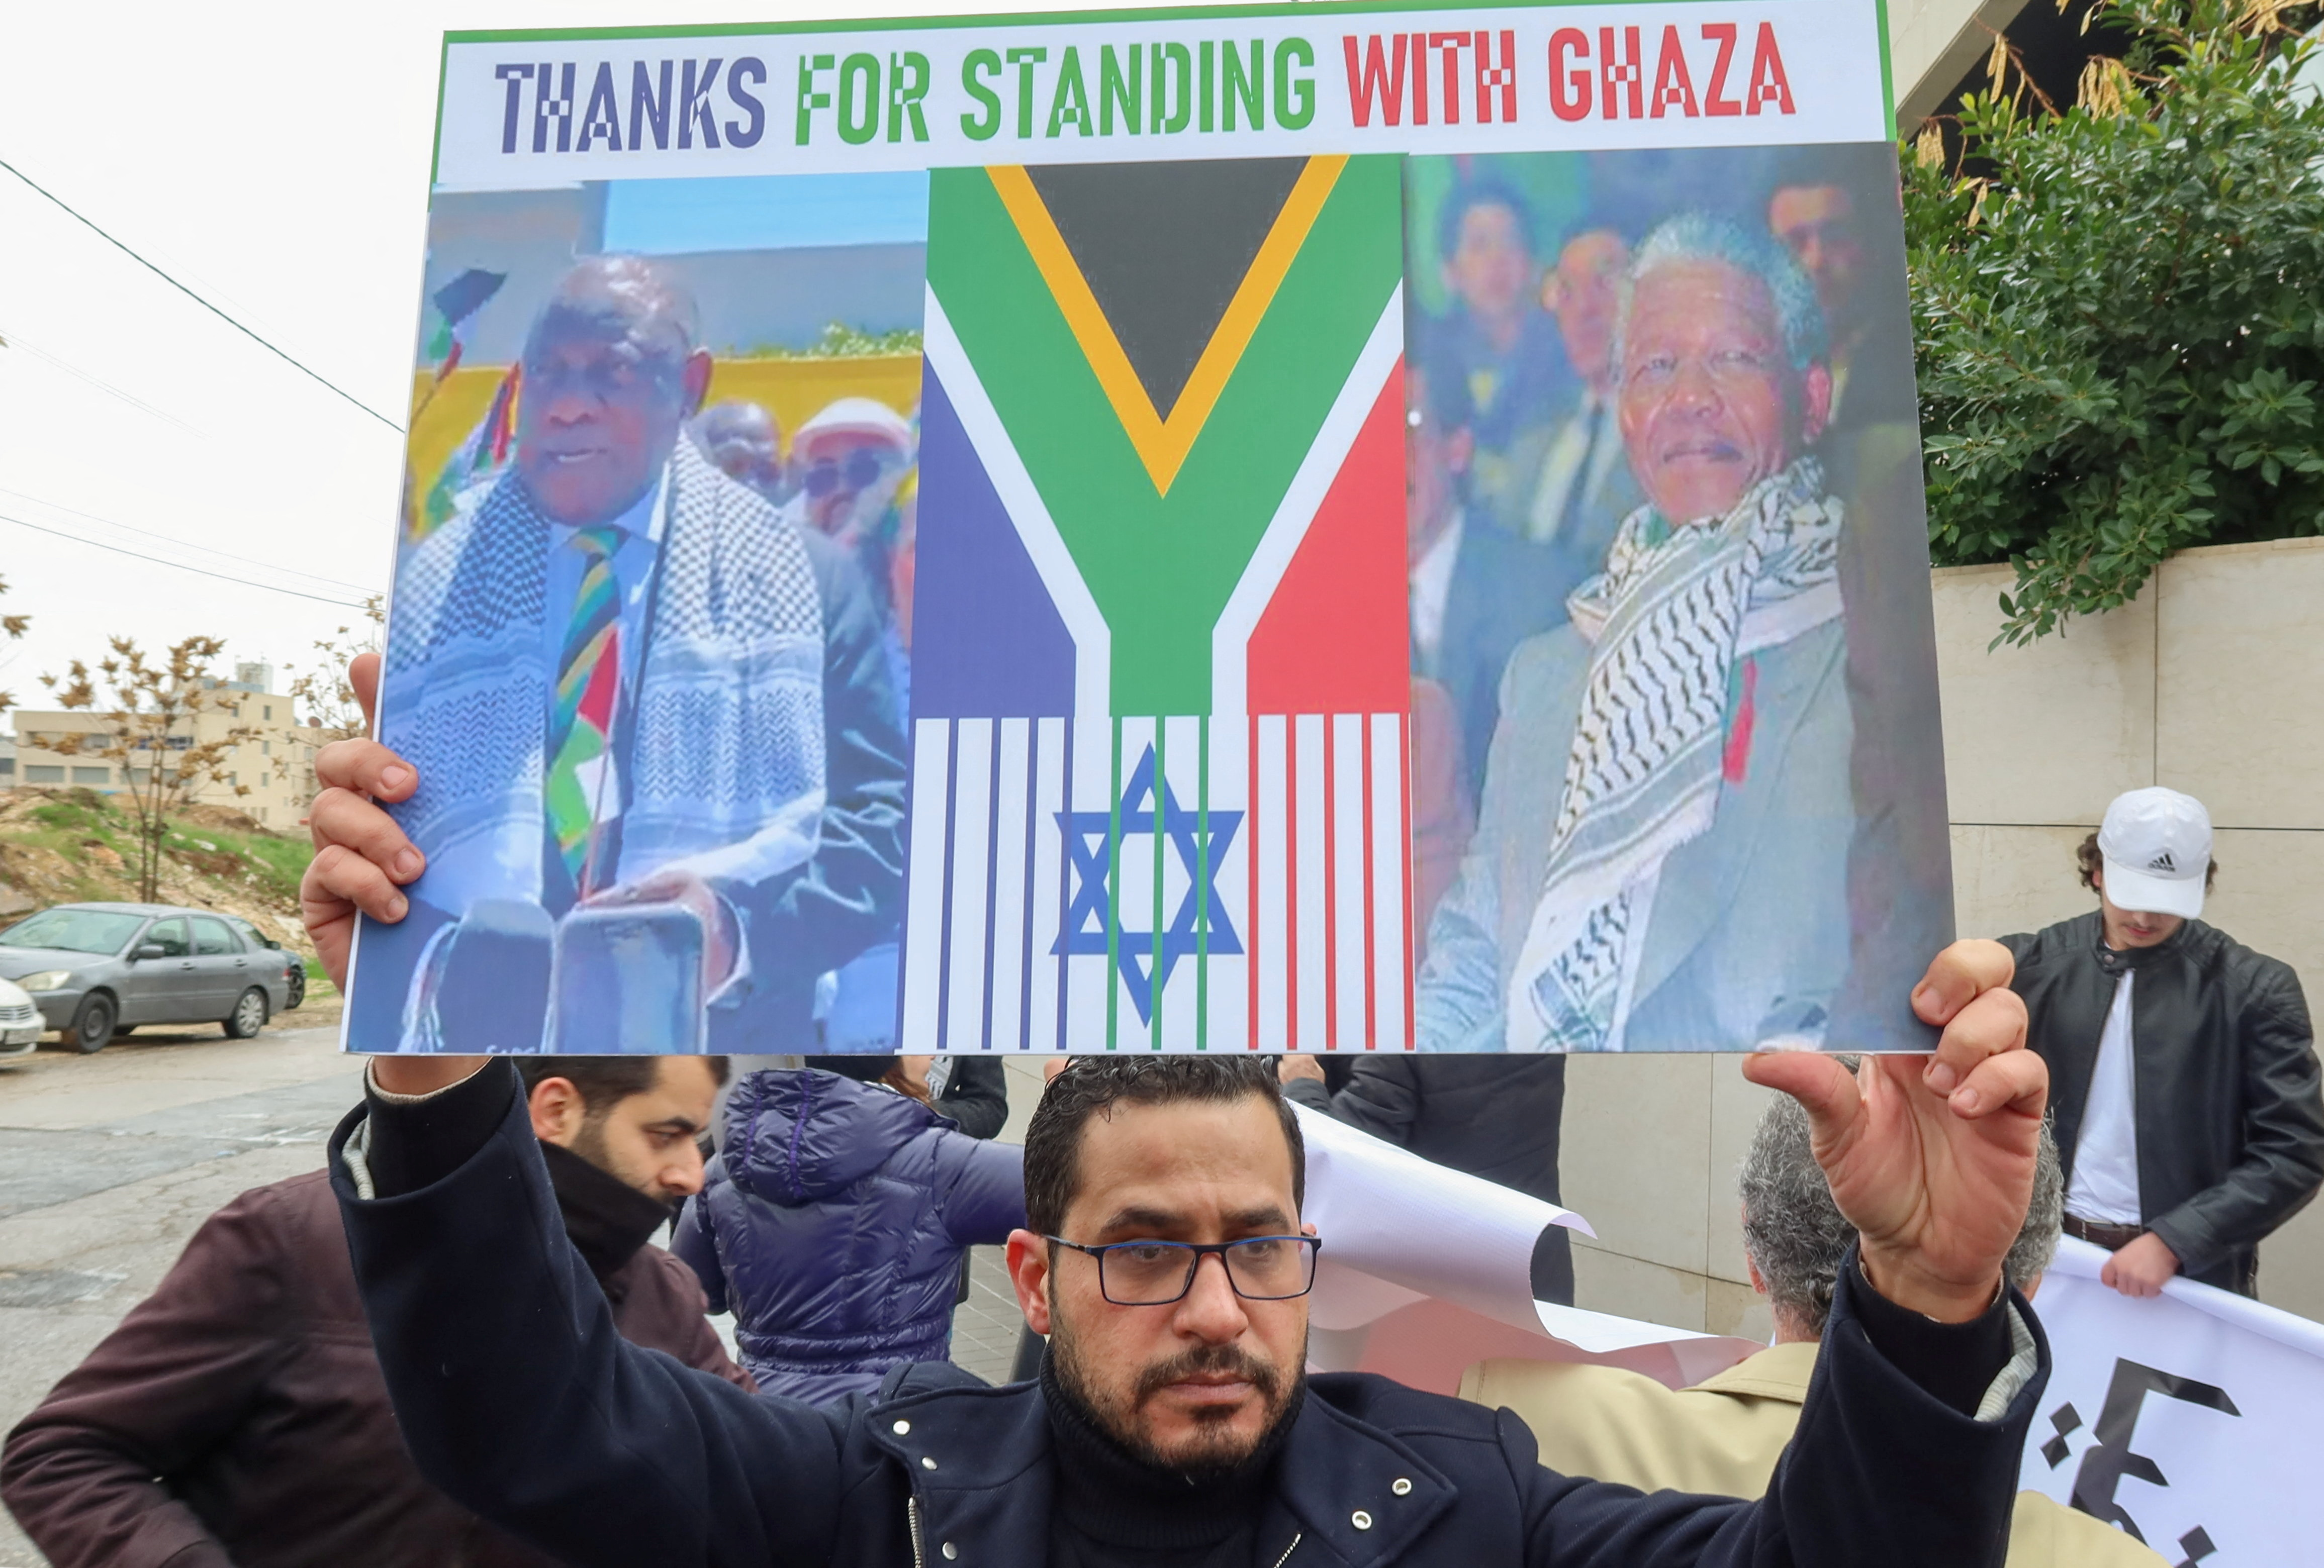 ICJ updates: South Africa's genocide case against Israel over Gaza